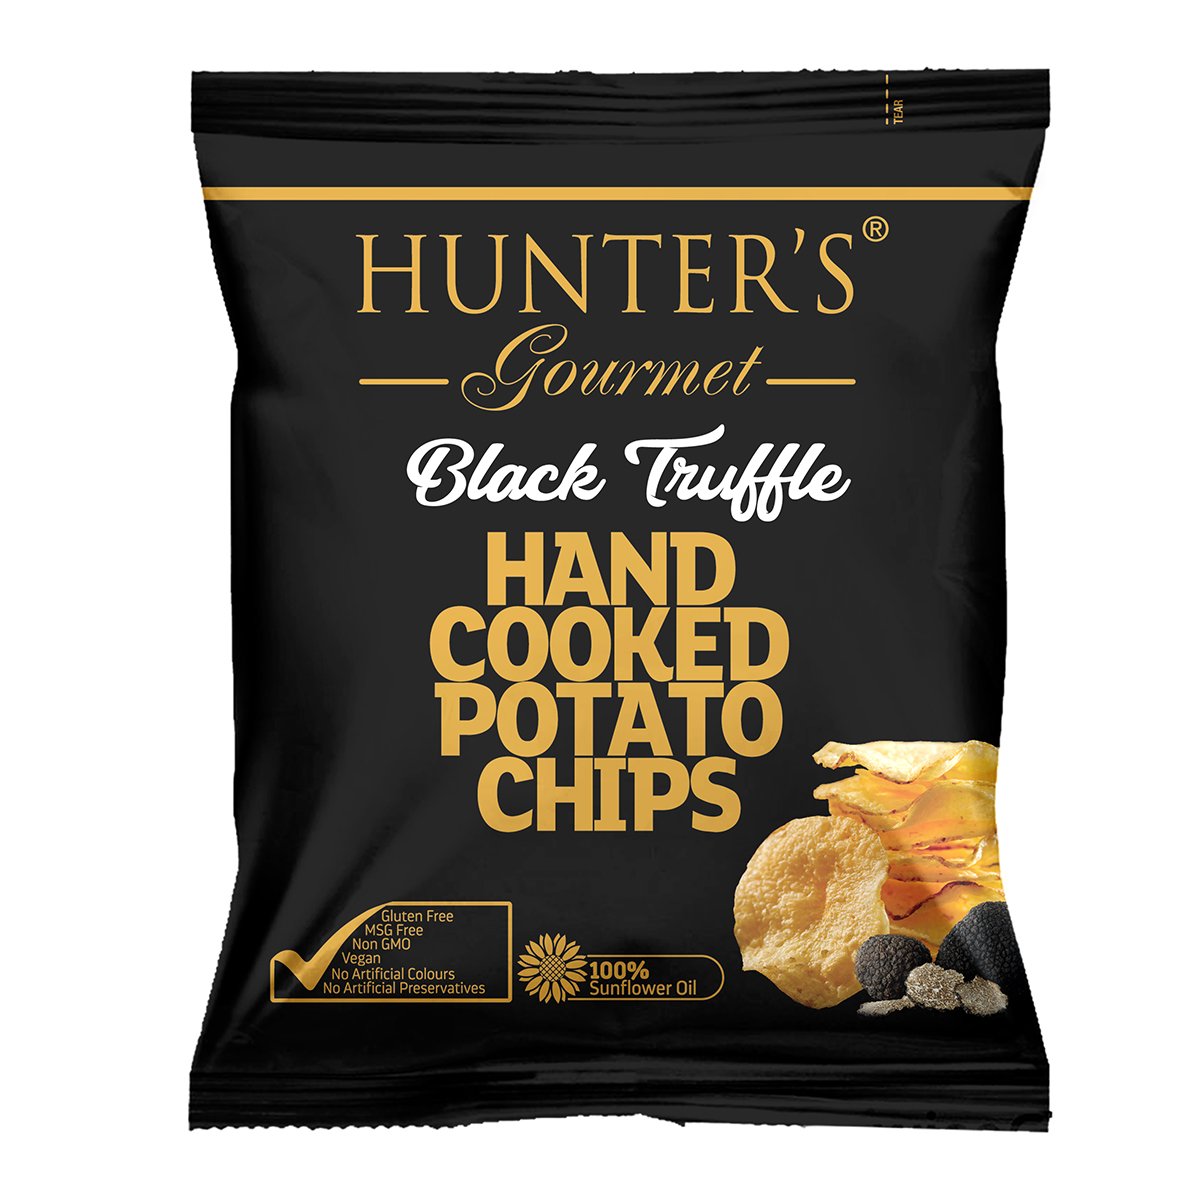 HUNTER'S GOURMET Hand Cooked Potato Chips - Black Truffle, 40g